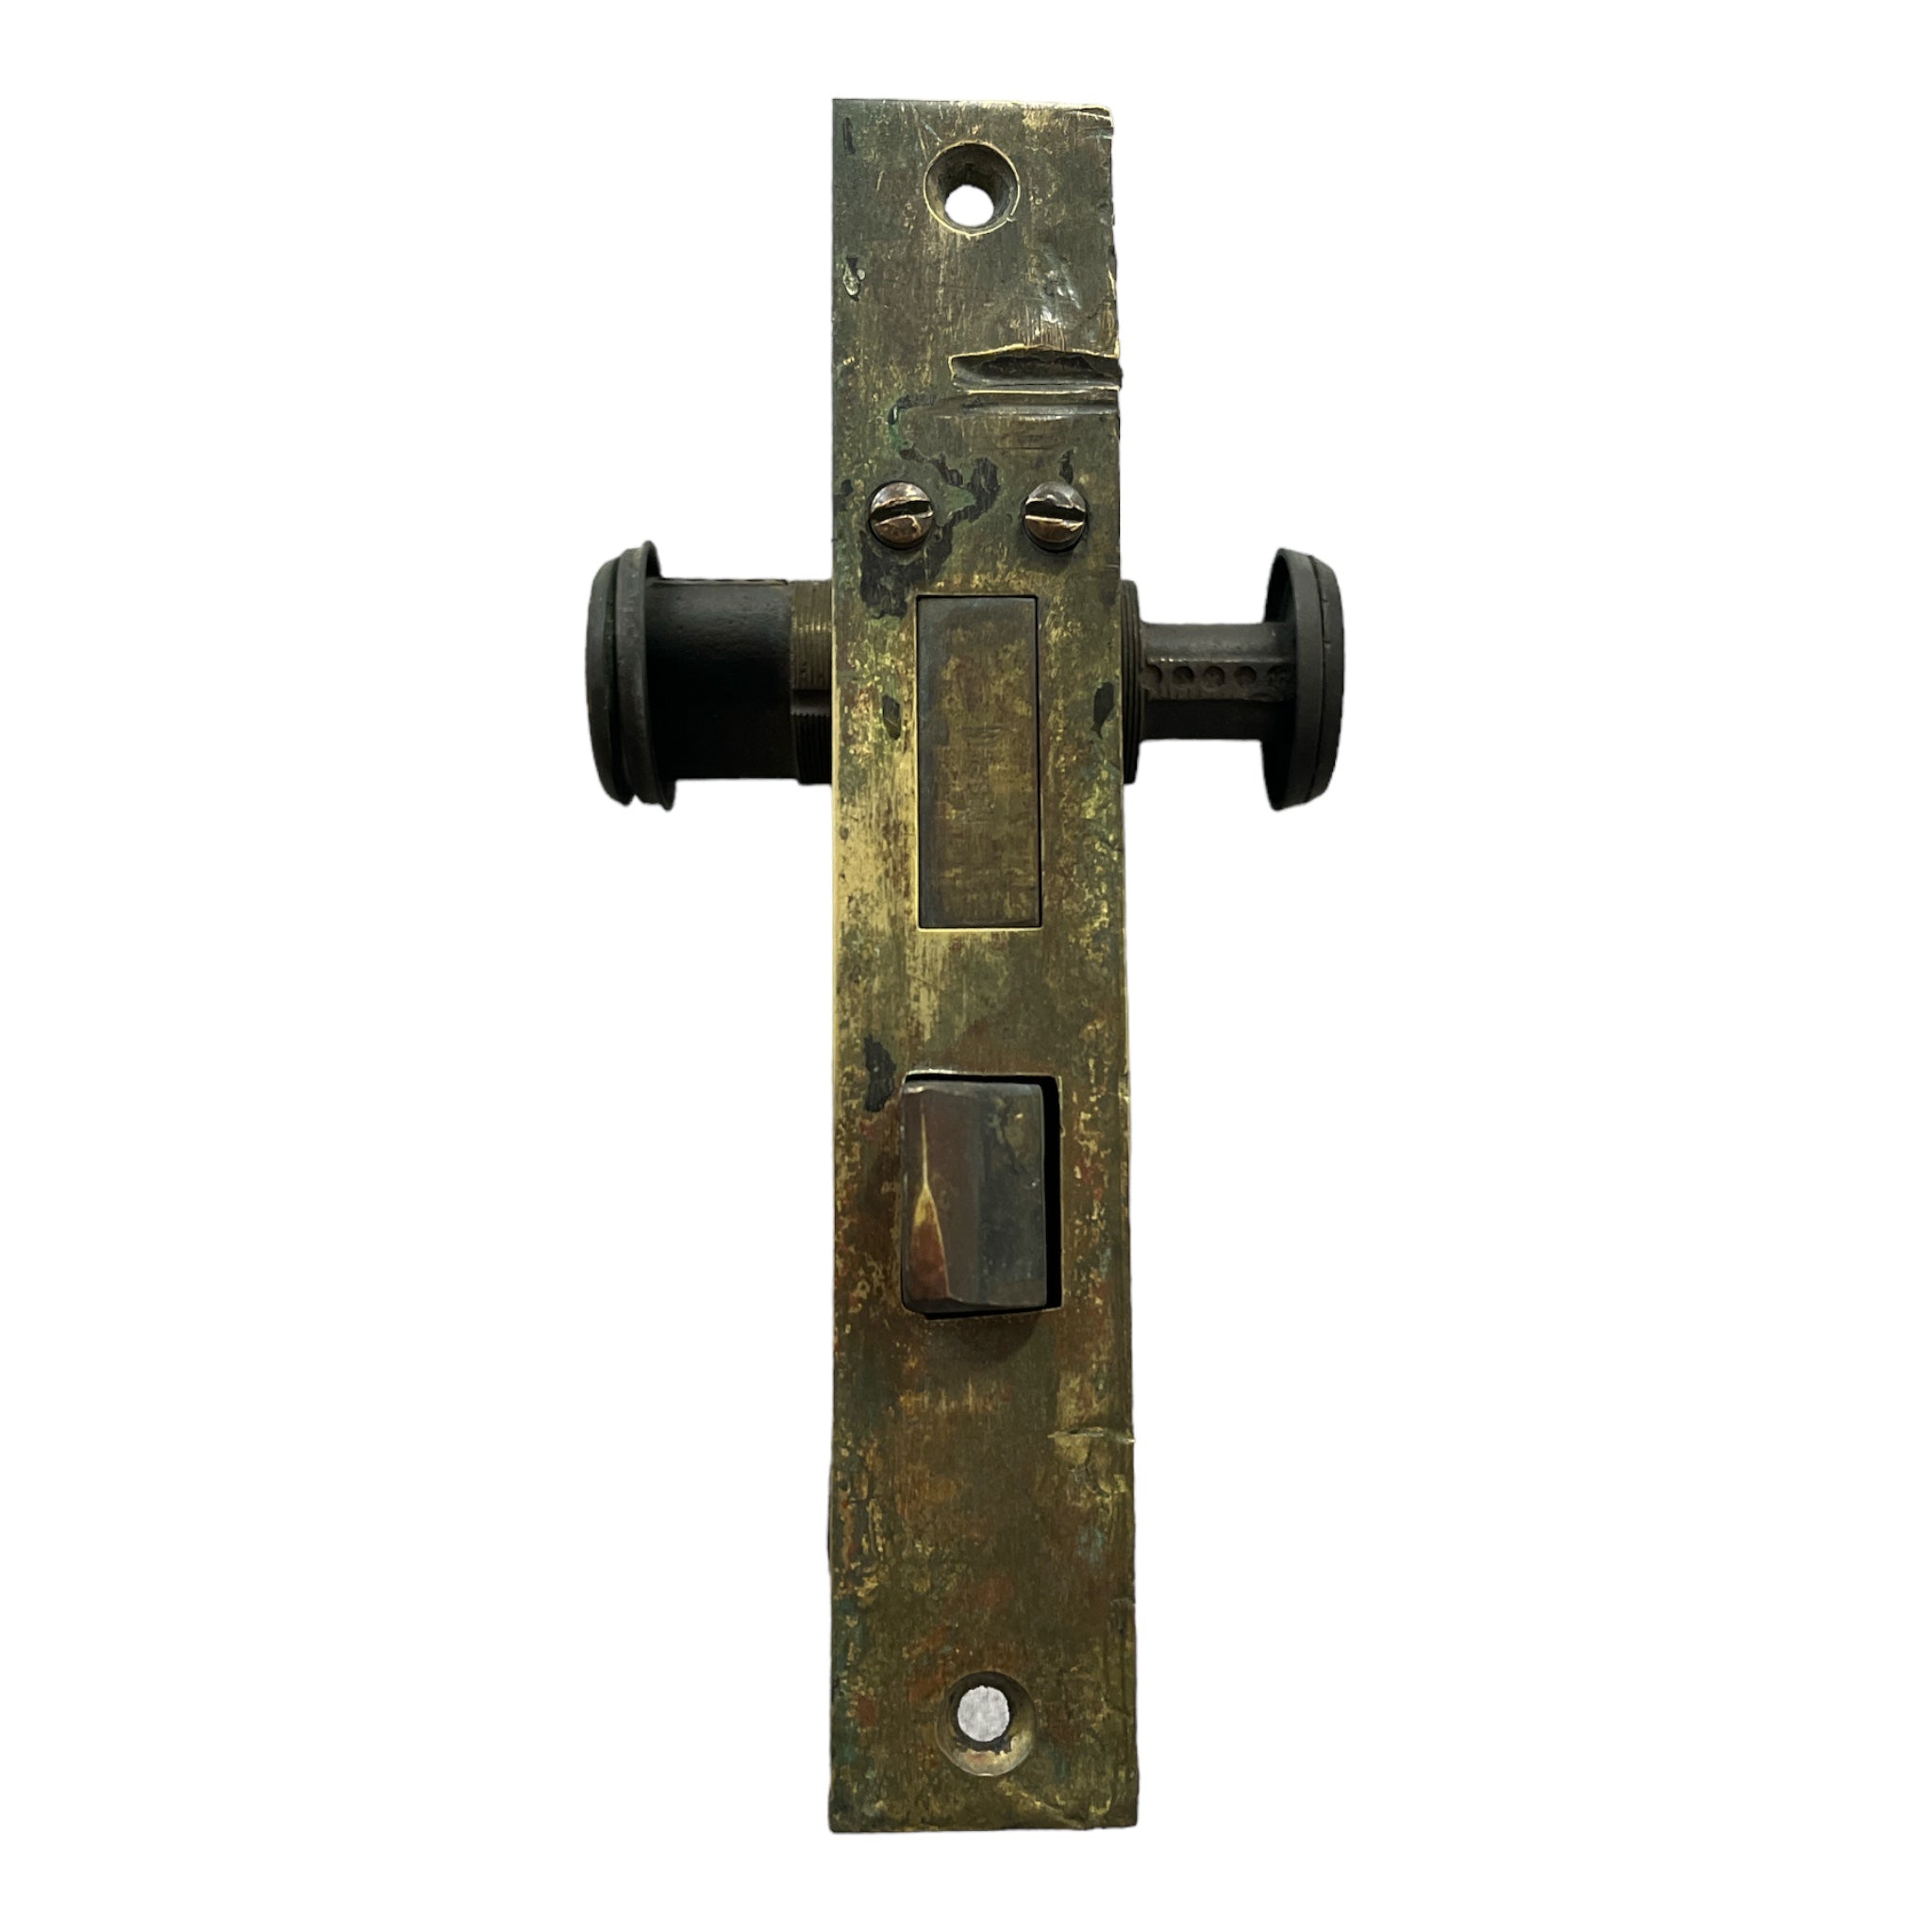 Large Antique Hadrain Exterior Door Hardware Set with Mortise Lock